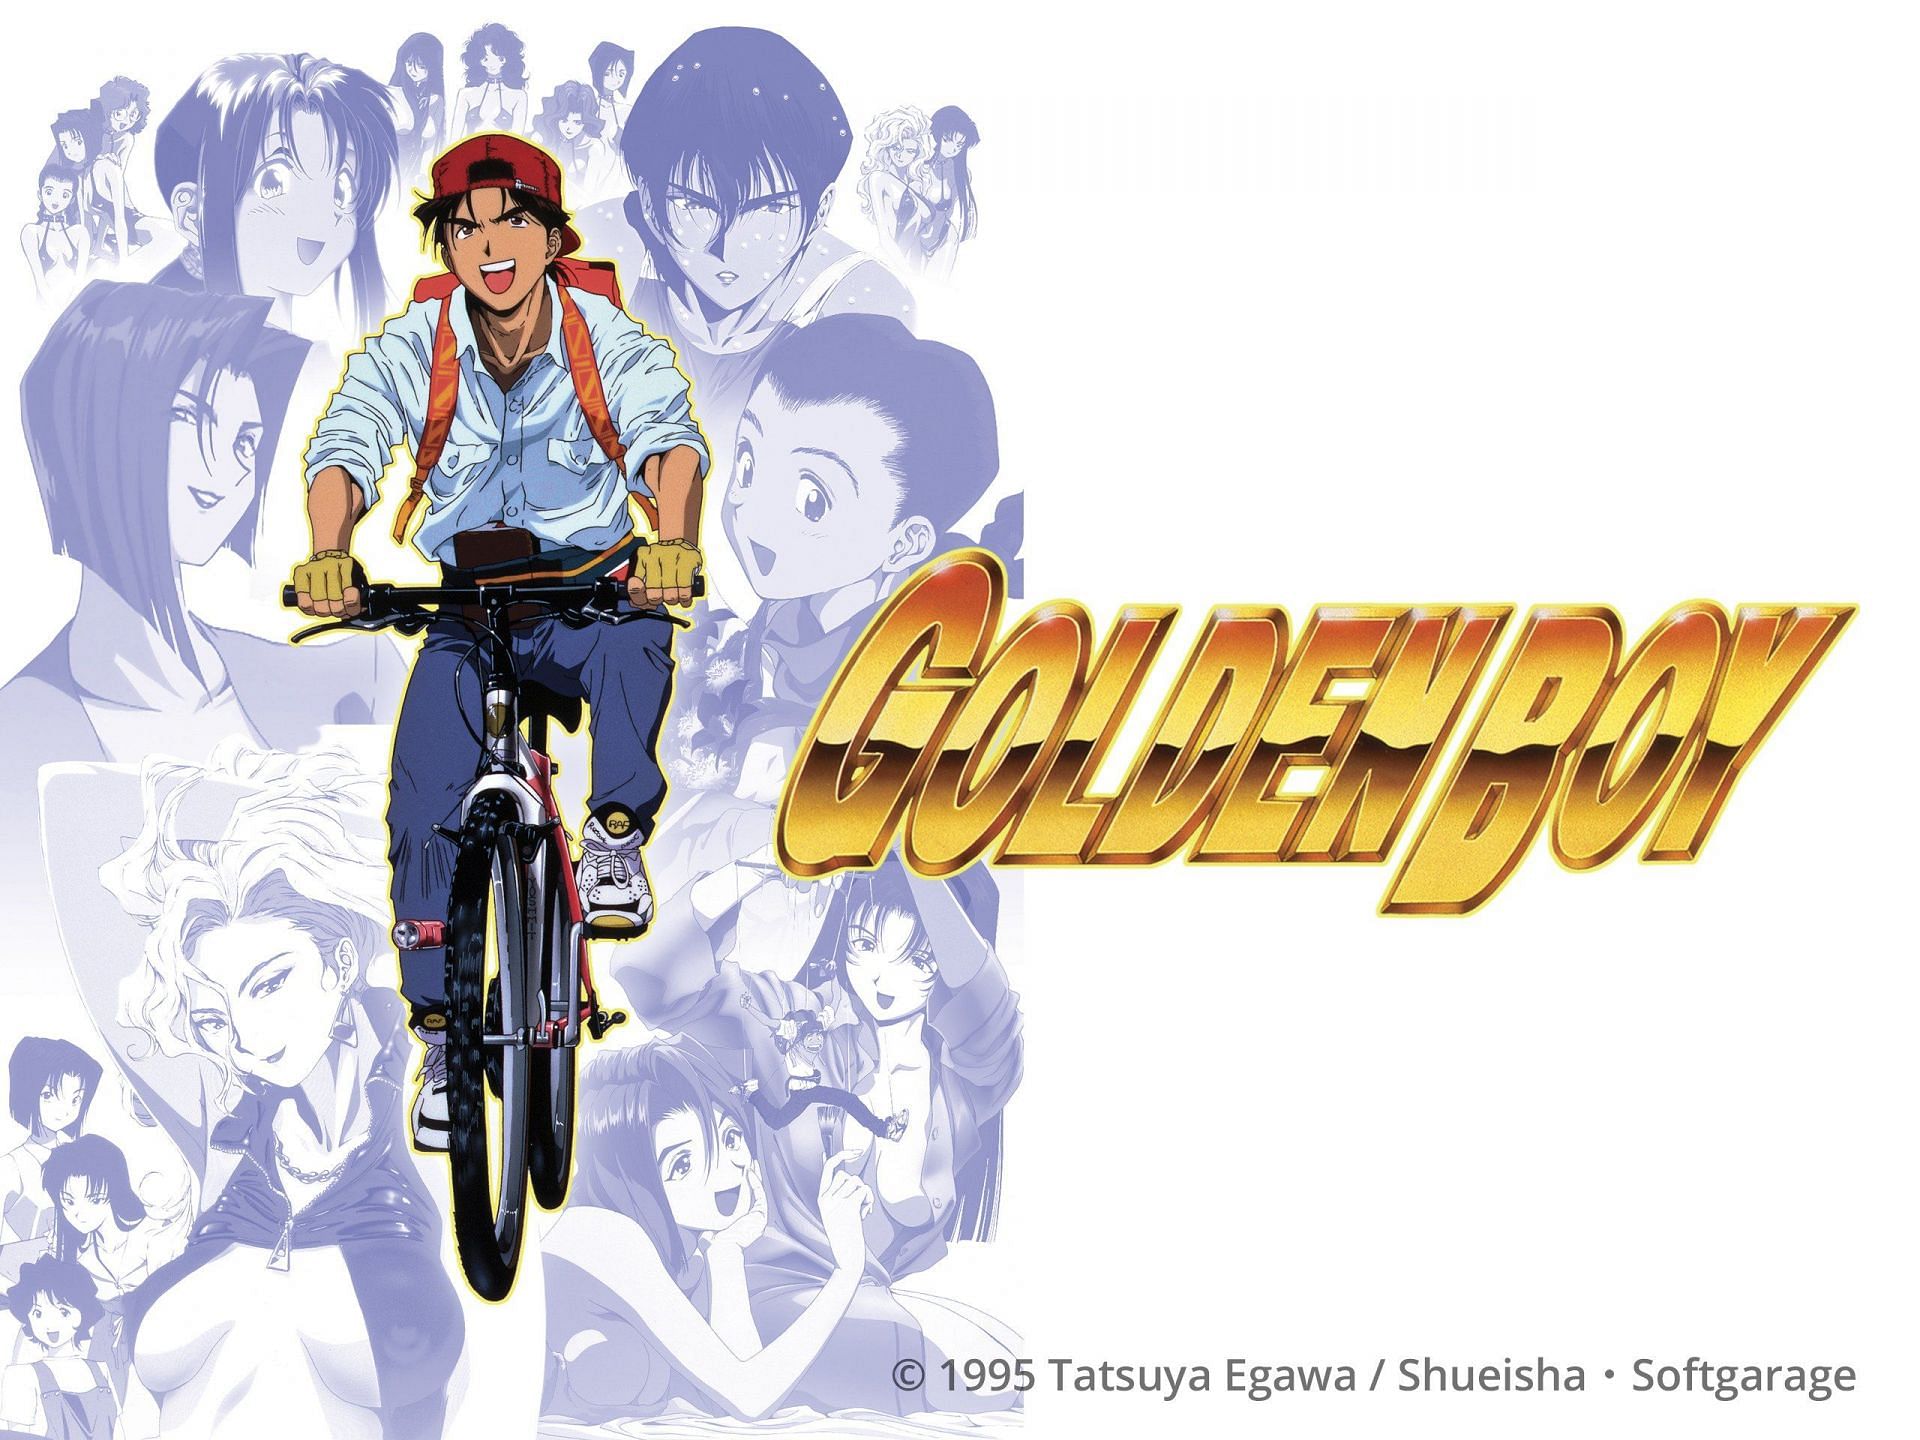 The official poster of Golden Boy (Image via Shueisha)